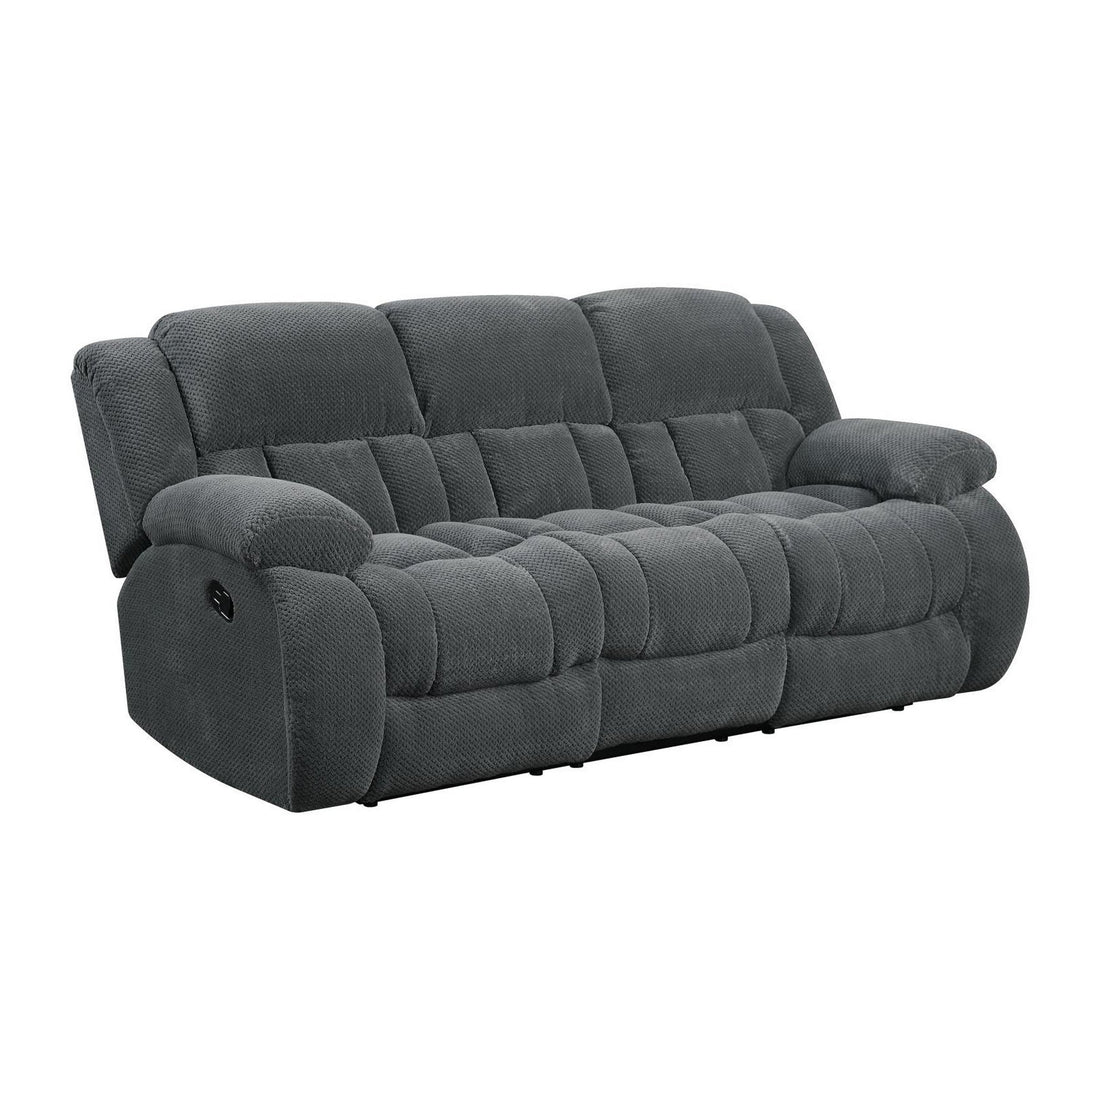 Weissman Pillow Top Arm Motion Sofa Charcoal 601921